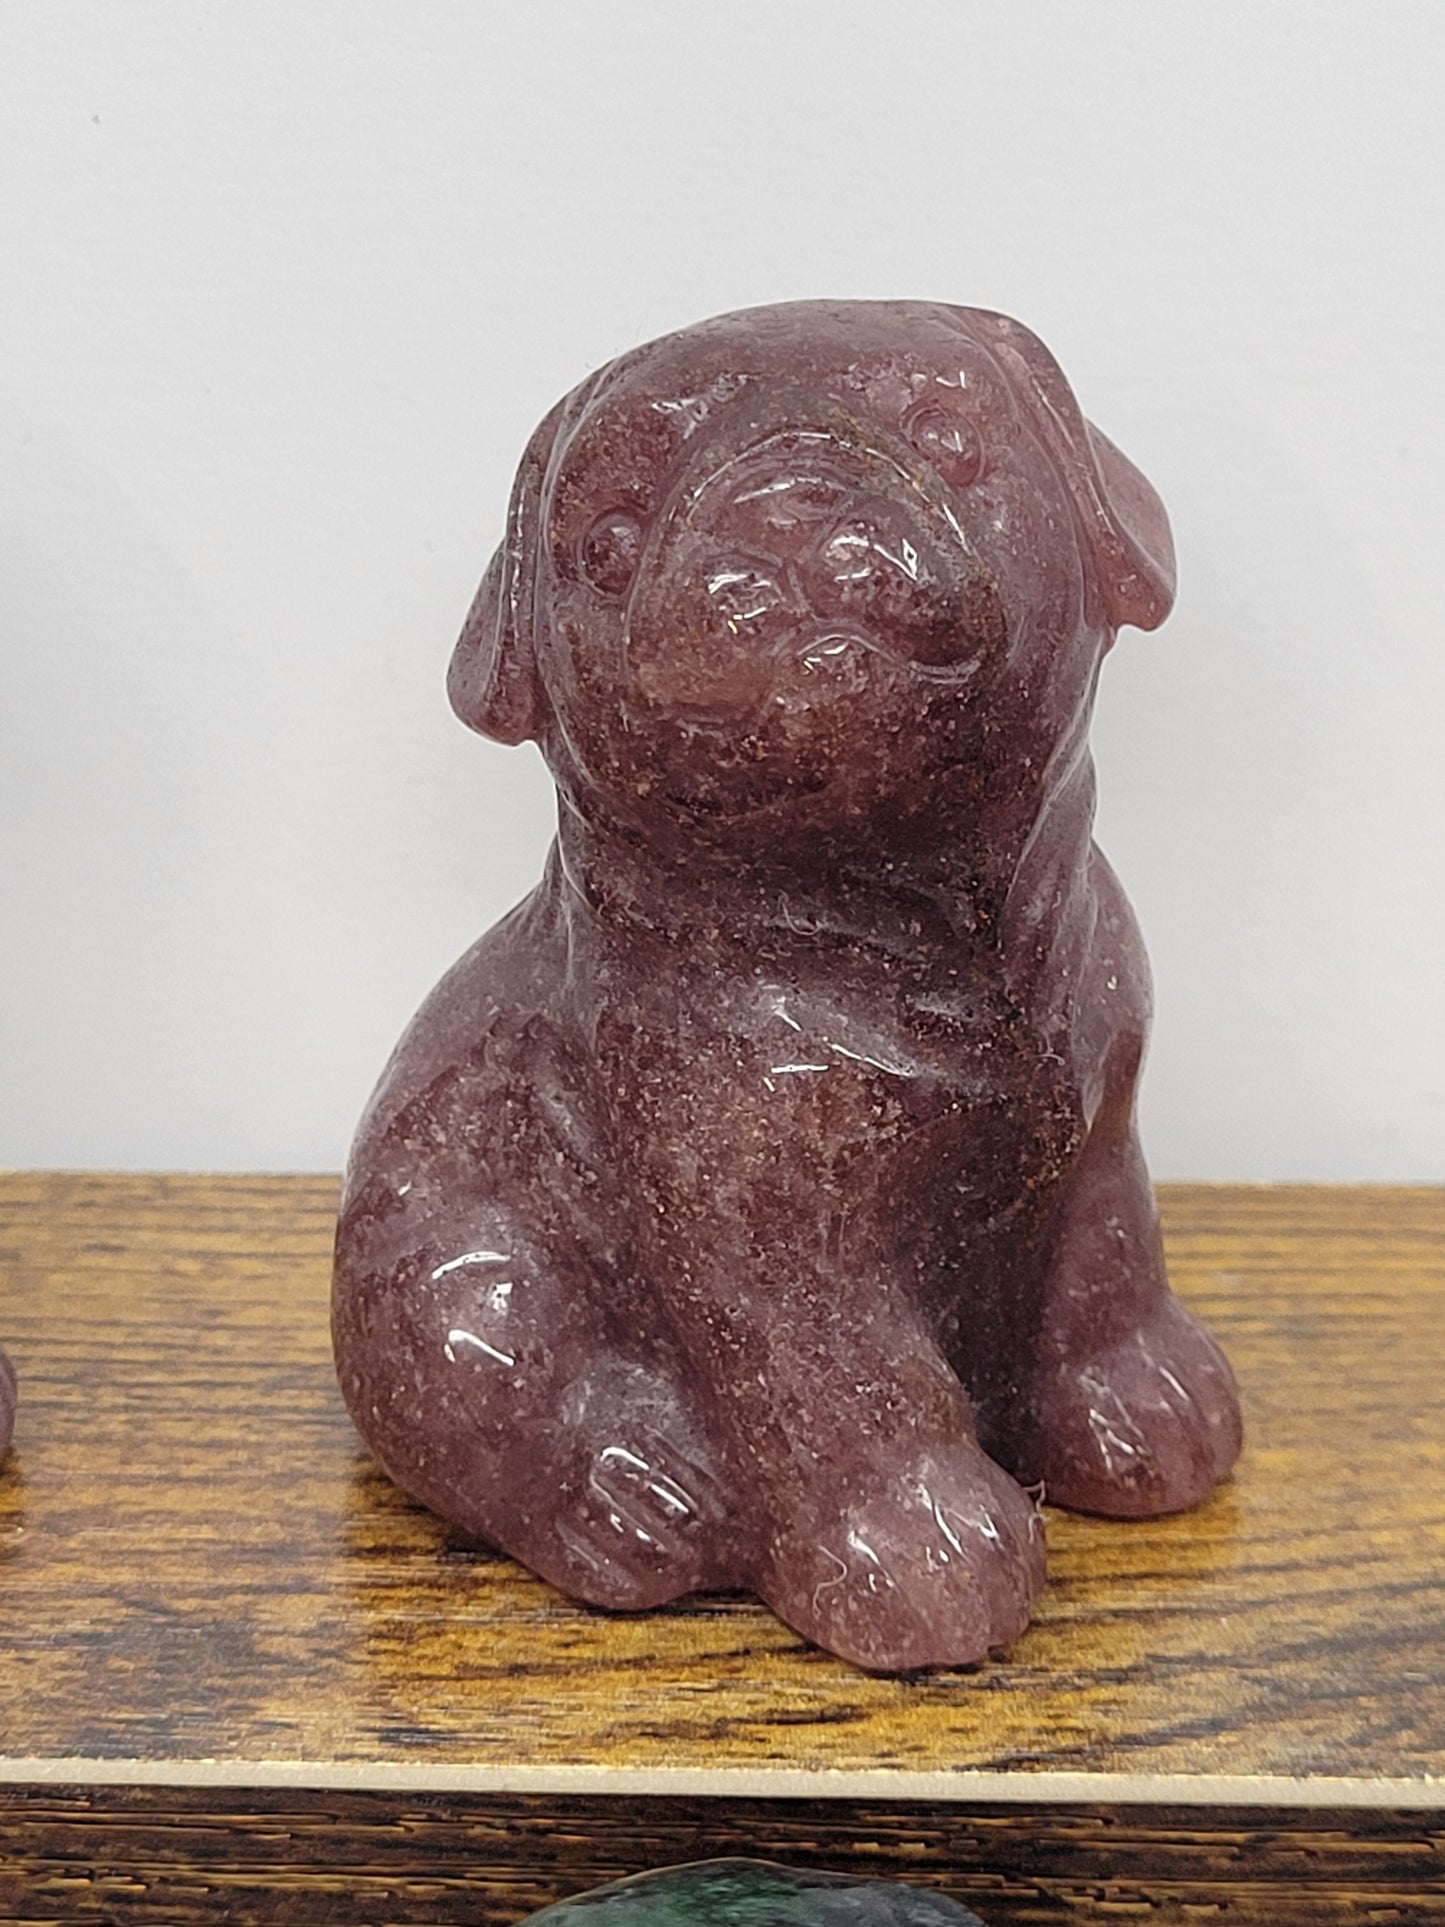 Dog carving - Pug